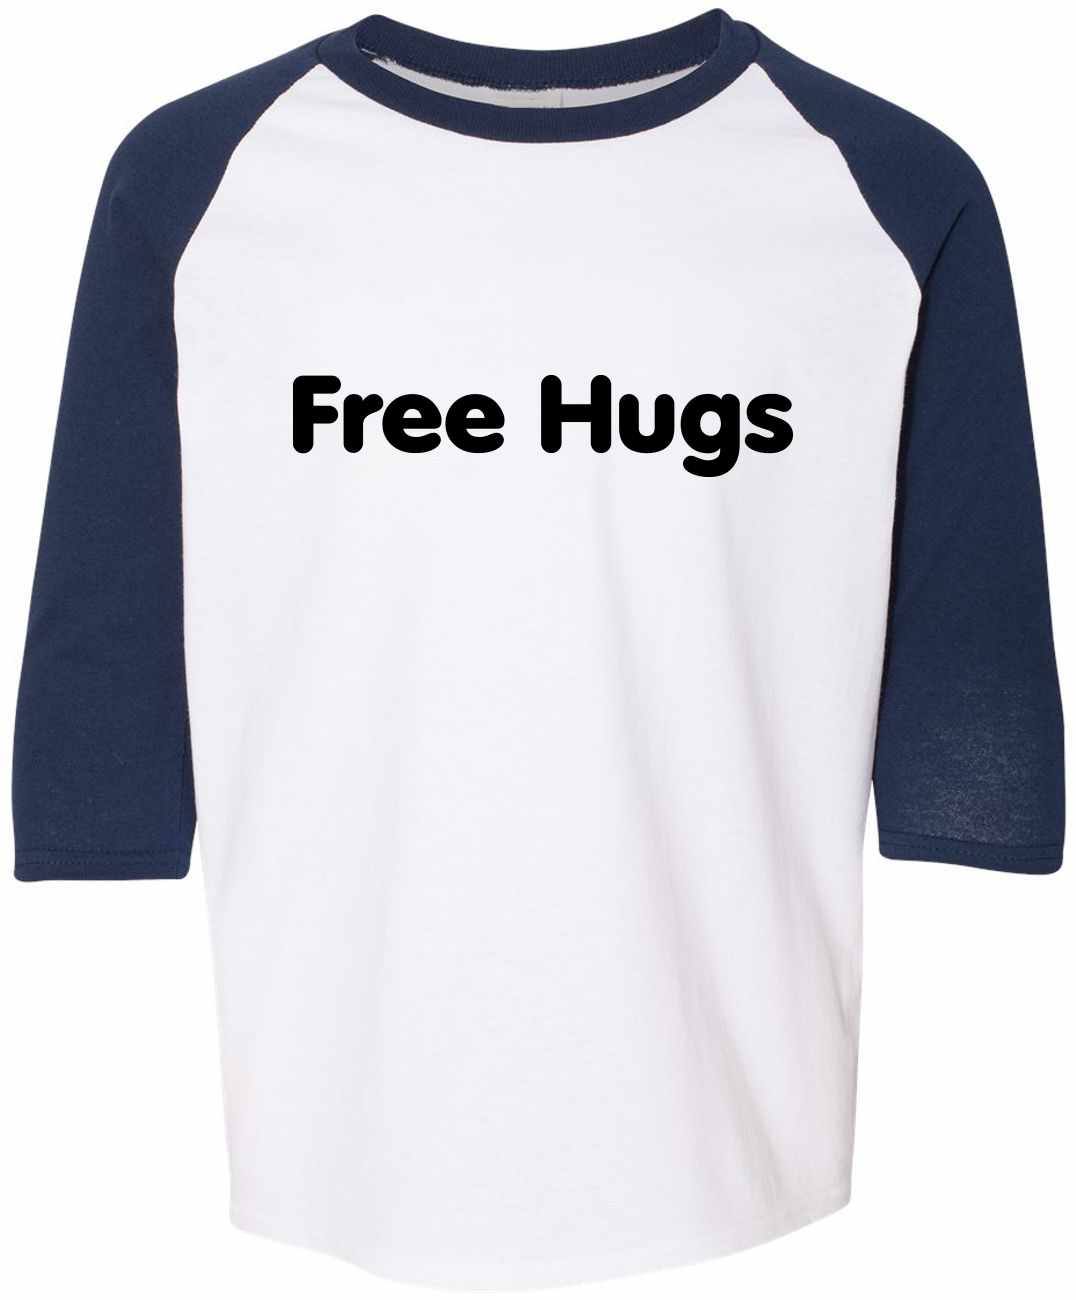 Free Hugs on Youth Baseball Shirt (#626-212)